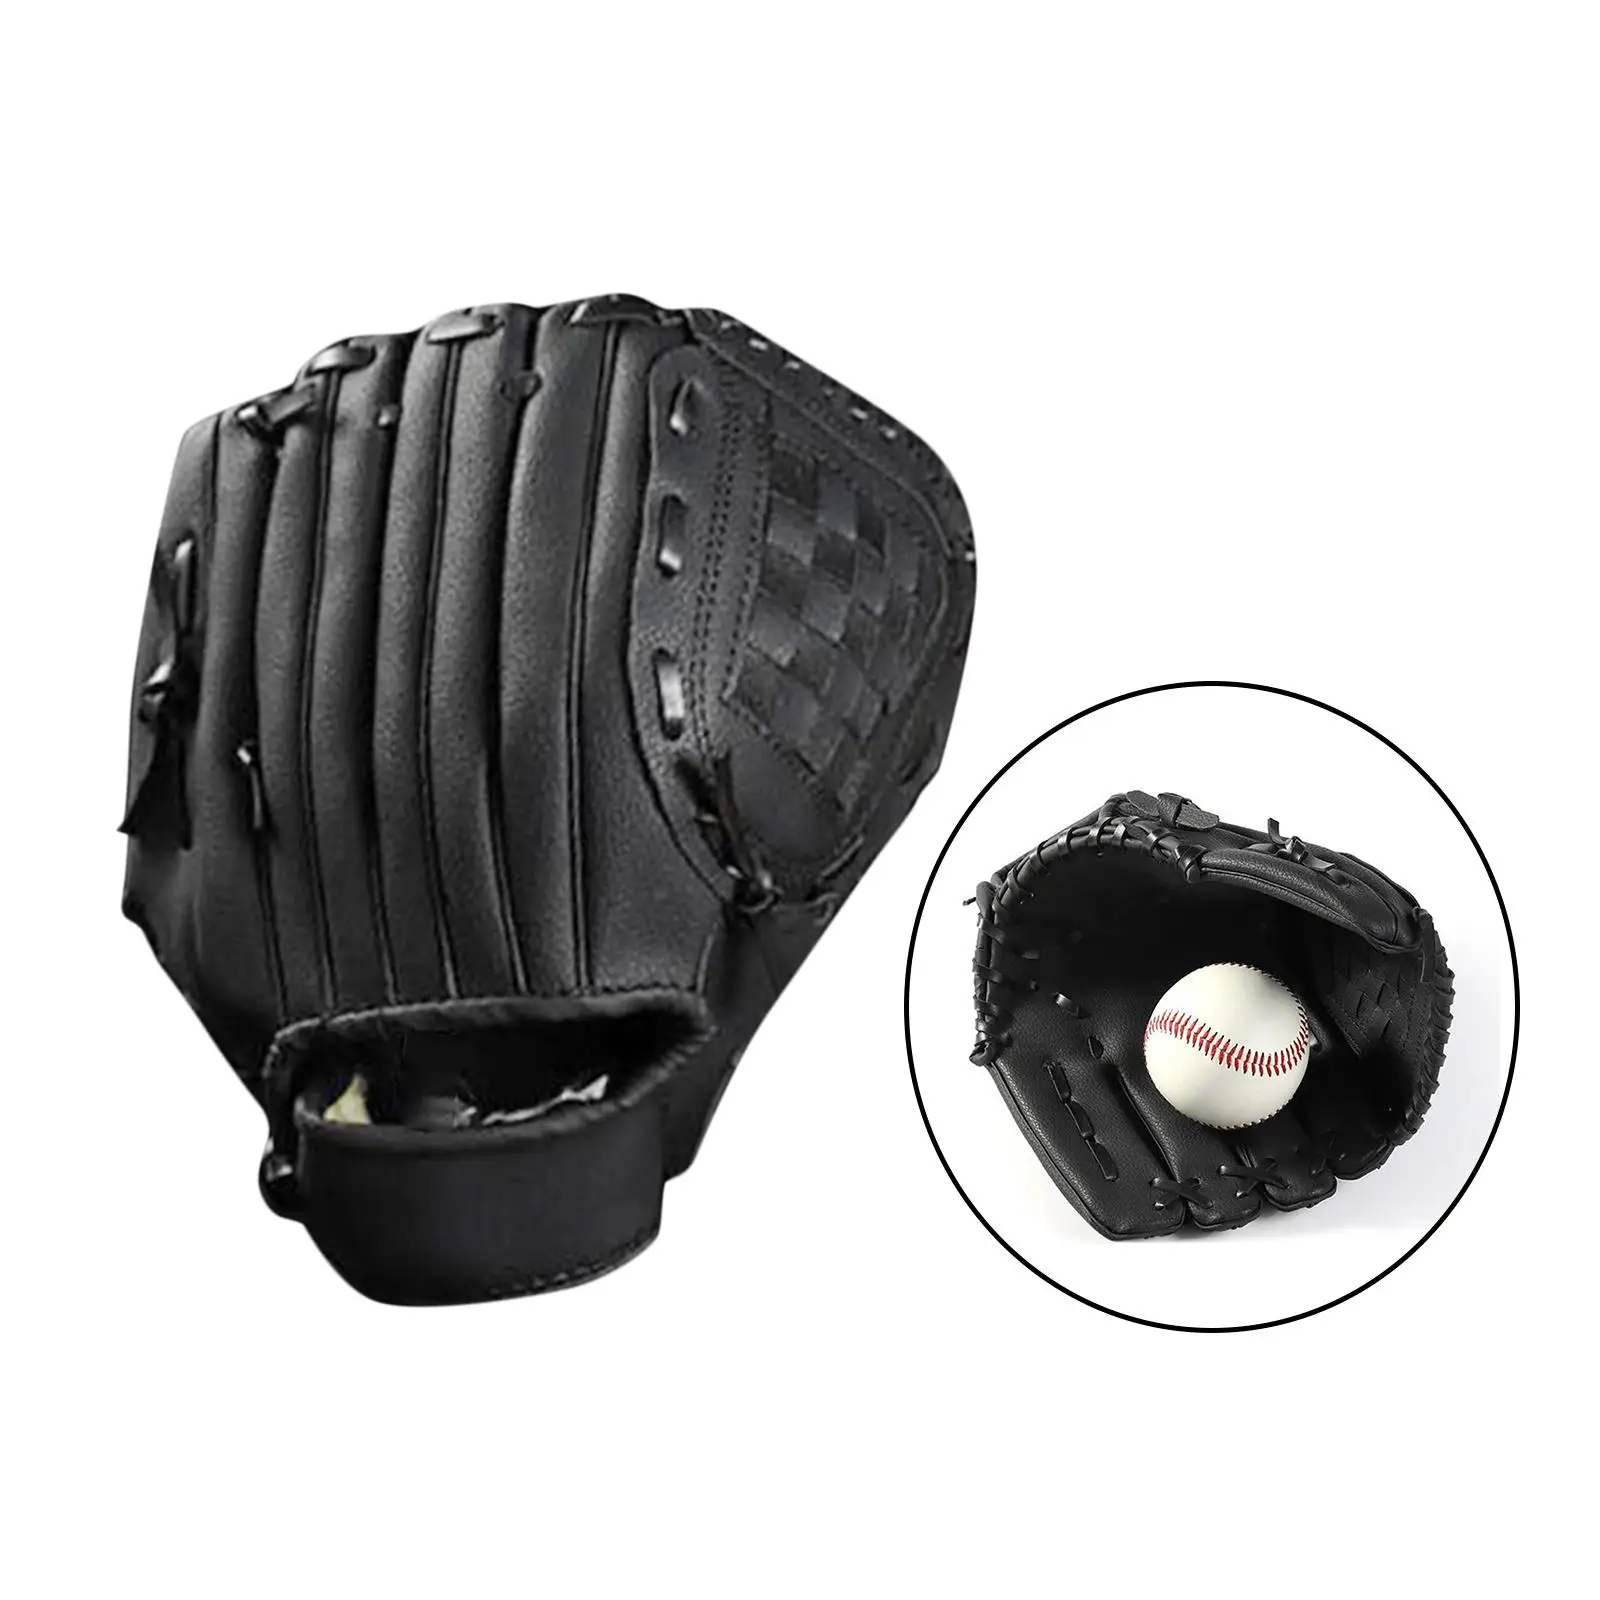 Baseball Glove Thickened Easy to Break in Softball Glove Baseball Fielding Glove for Batting Sports Training Beginner Backyard